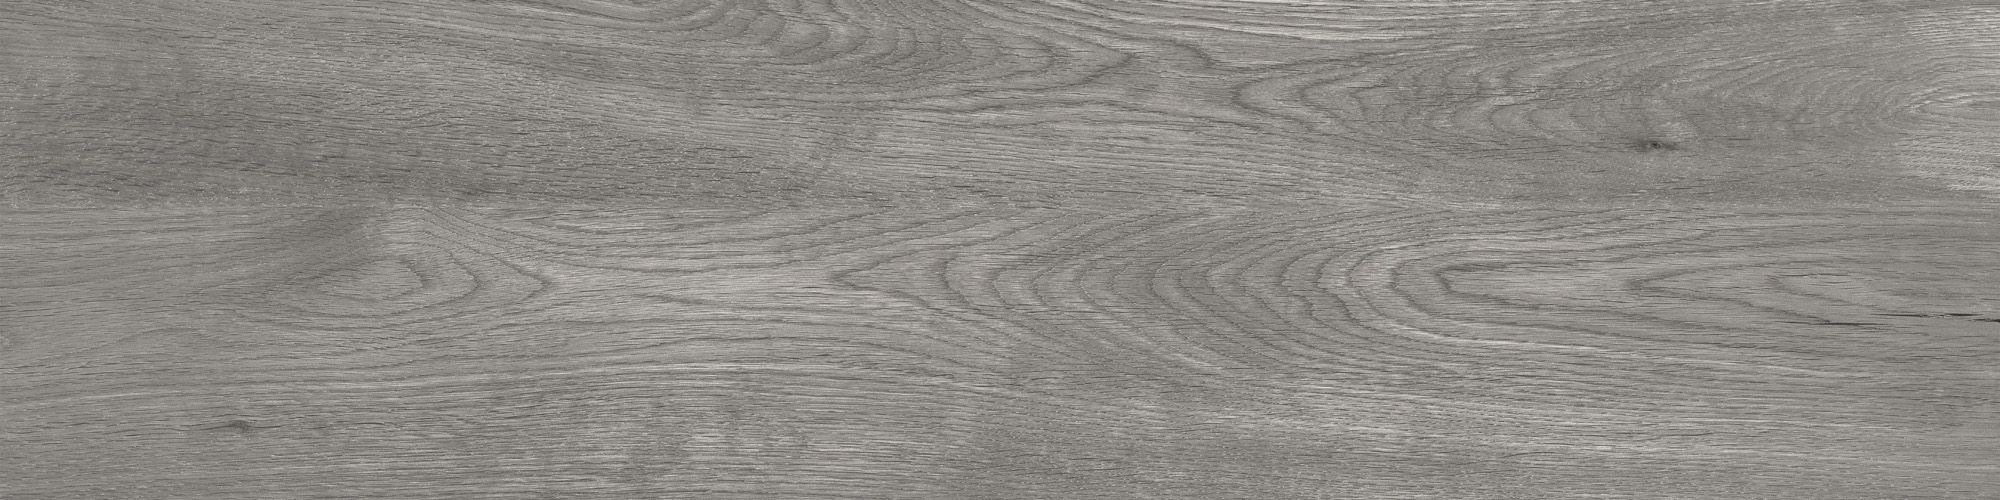 Alpina Wood grey 892920